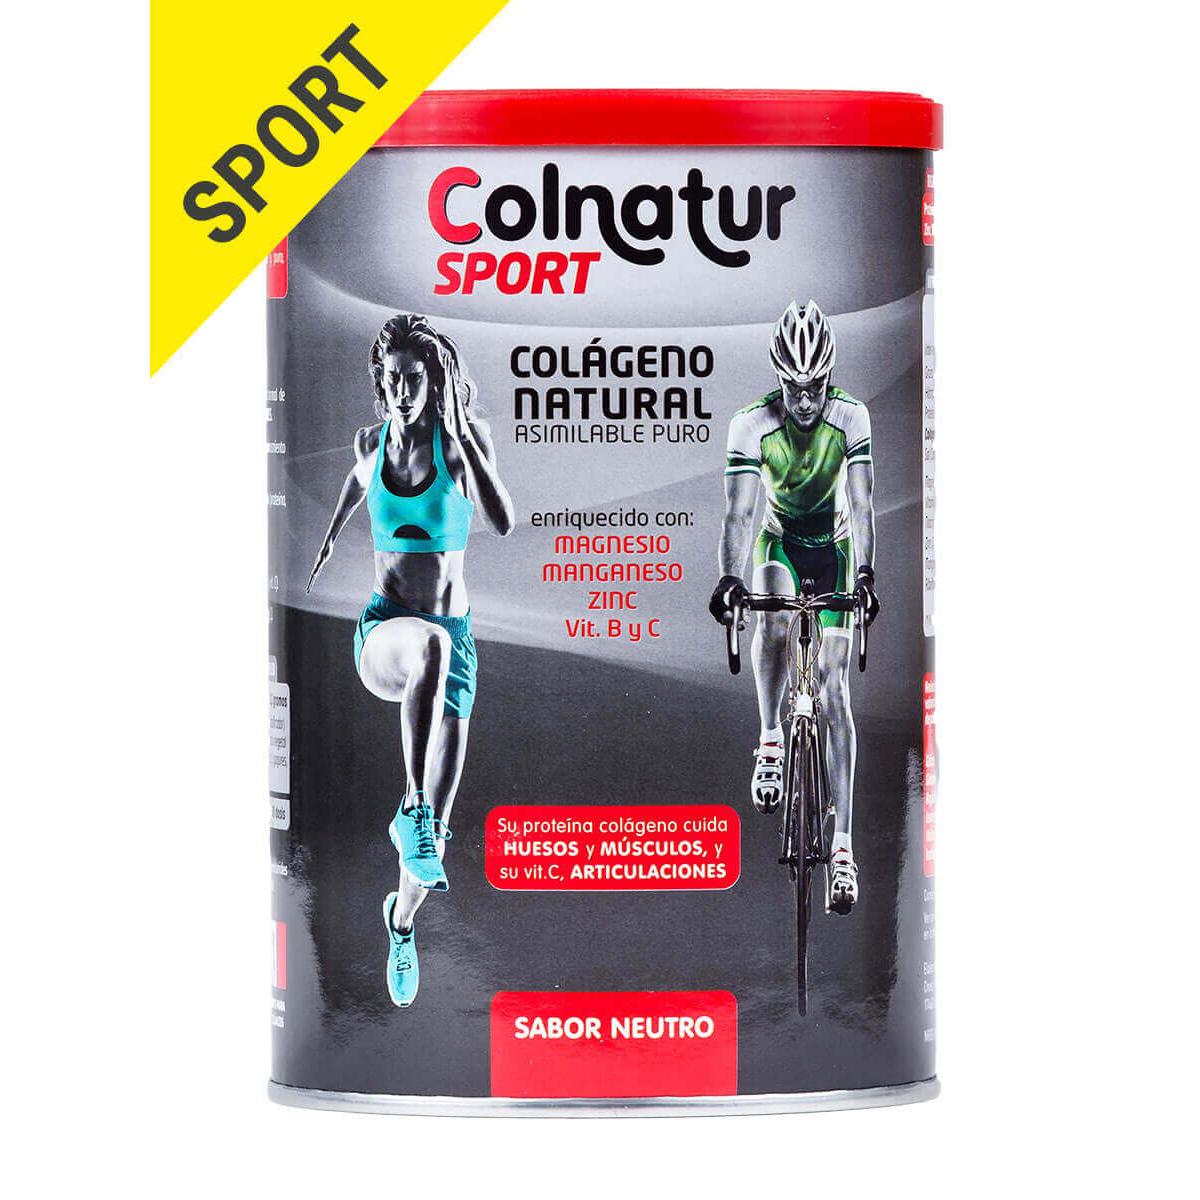 Colnatur - Colnatur® sport colágeno natural sabor neutro 330 gramos